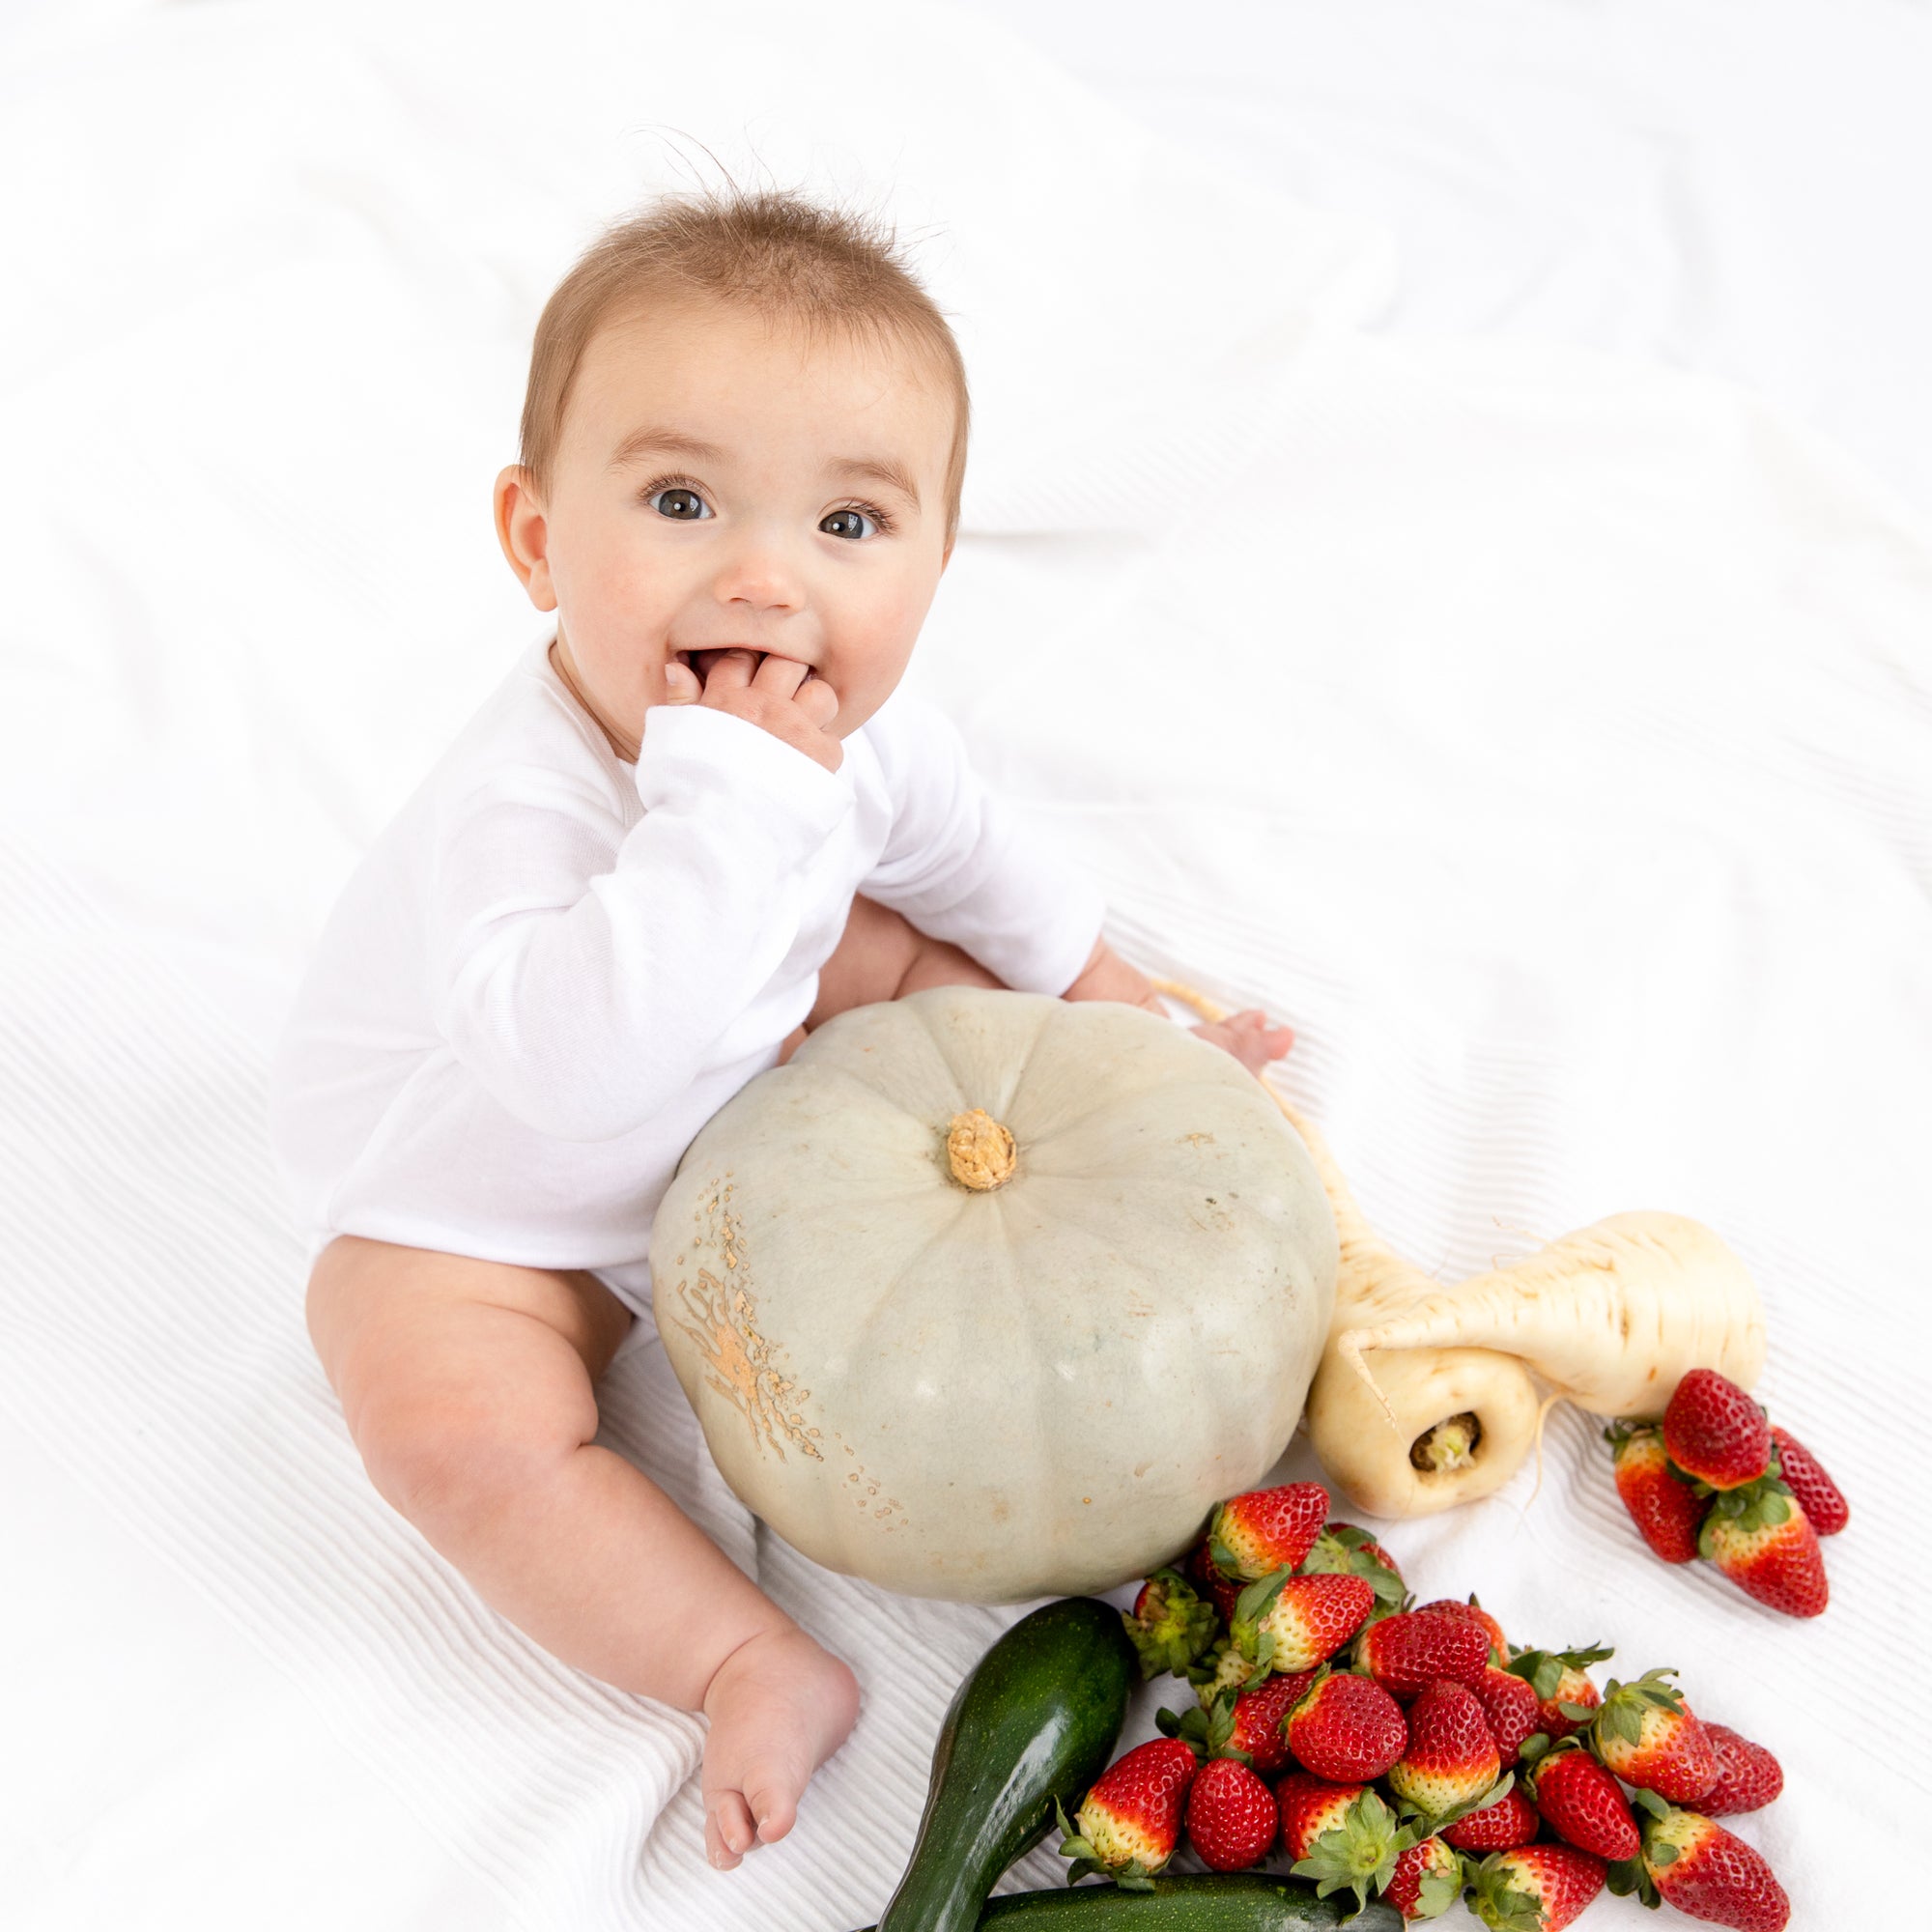 Nourishing Group 100% Australian Made & Produce for Babies & Kids